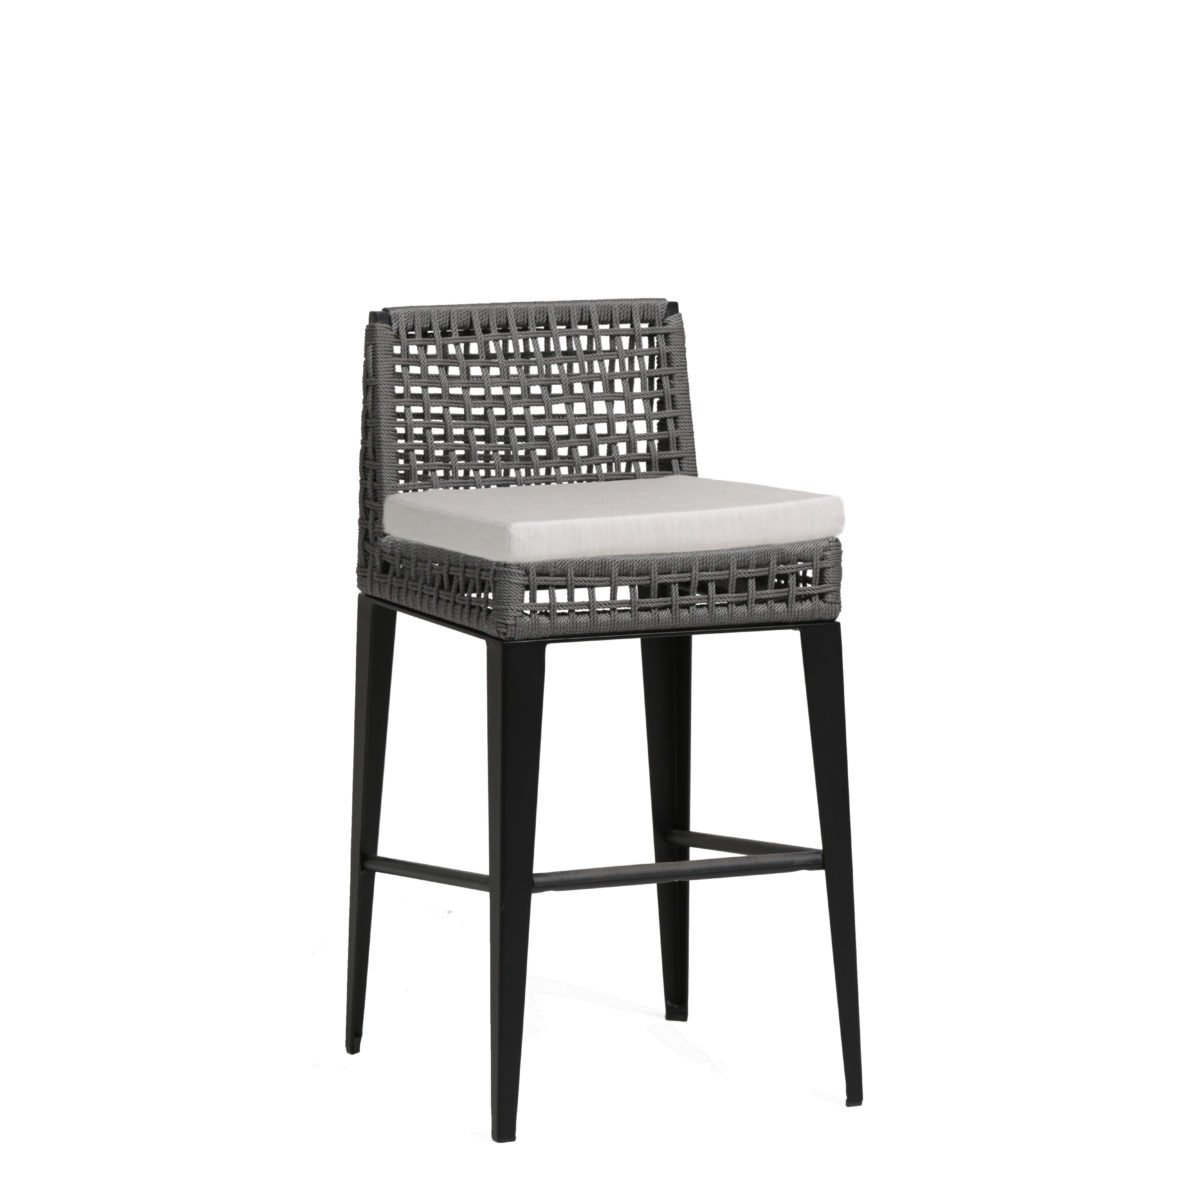 Genval-Bar-Chair-Angle-1-e1599847227352-1200x1200.jpg